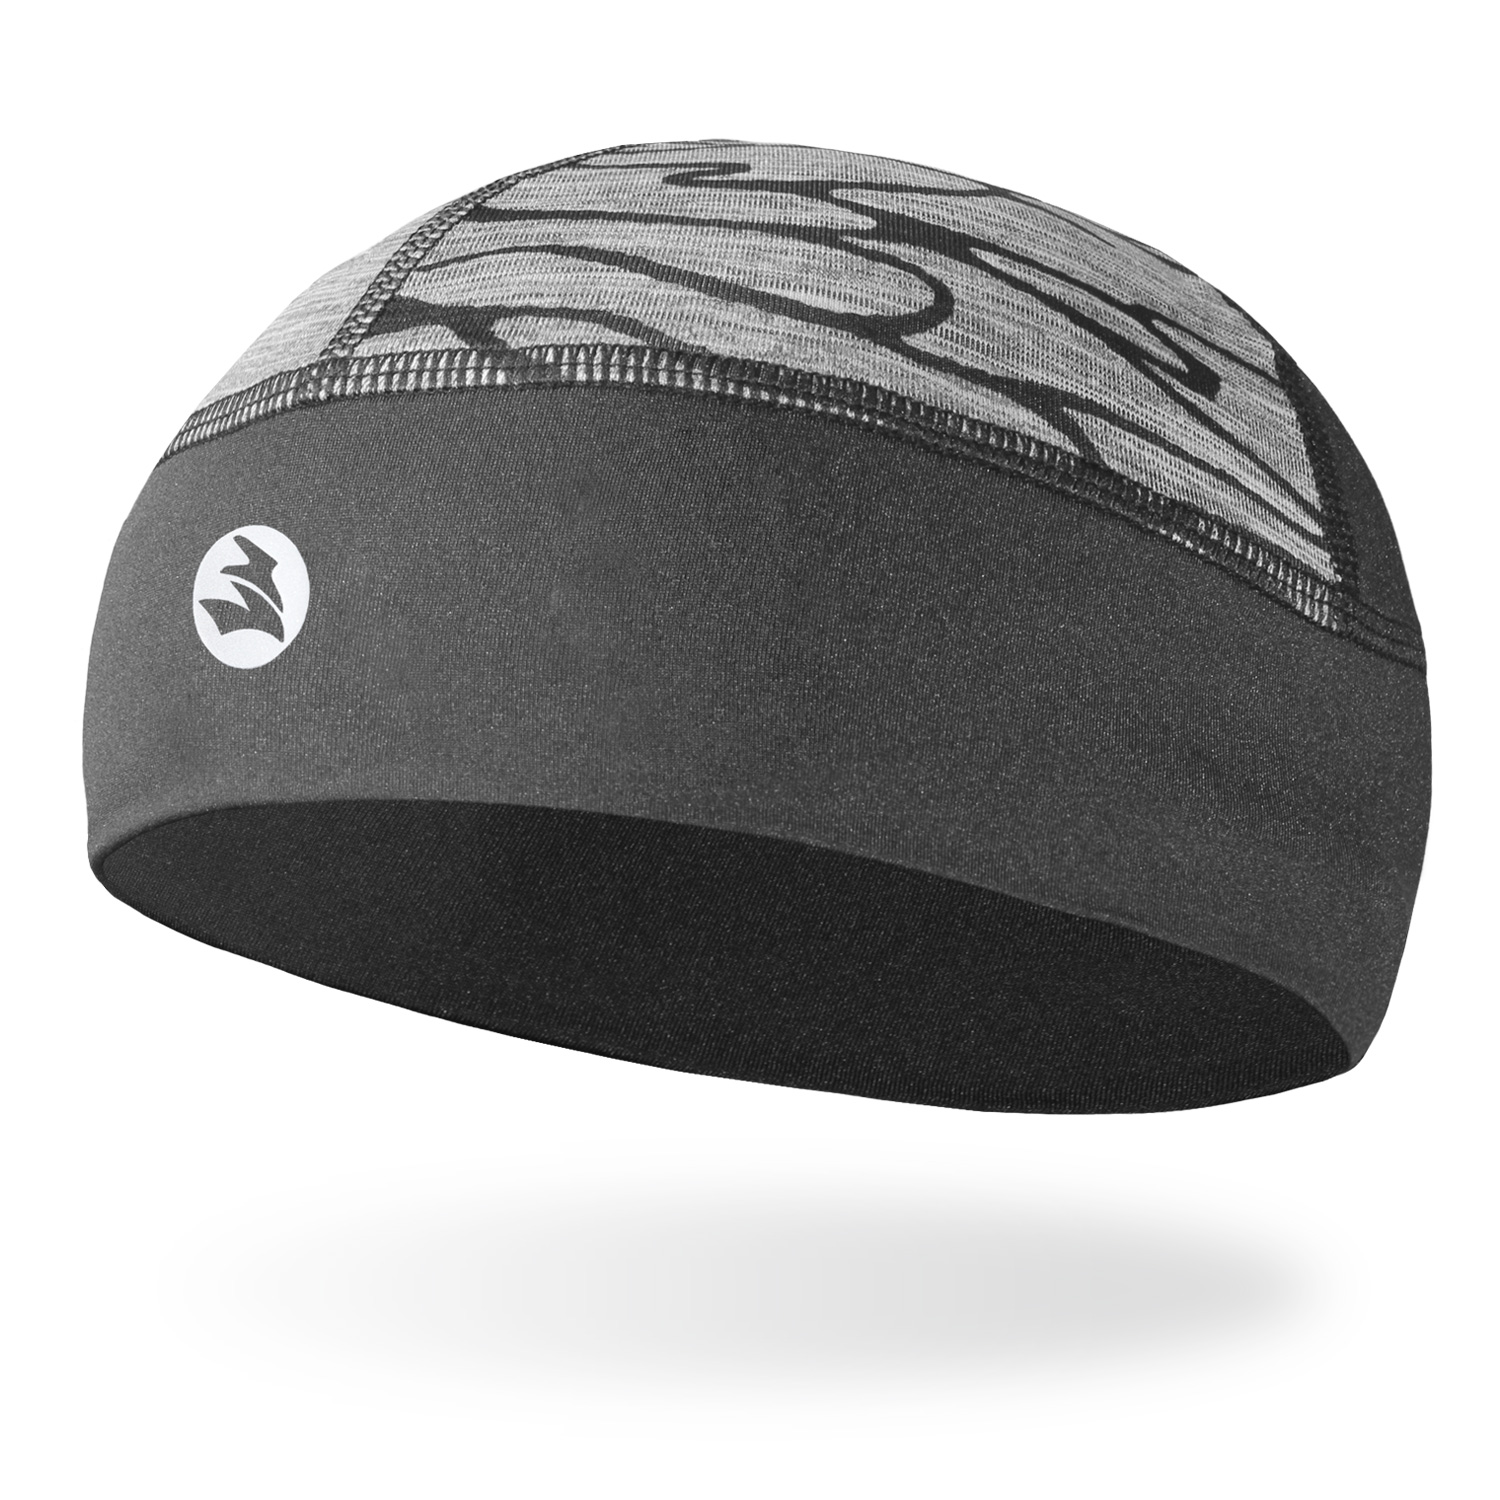 Low-Profile Cooling Helmet/Hard hat Liner, Strech Working Cap, Summer Sweat Wicking Skull Cap, Running Beanie Sun Protection